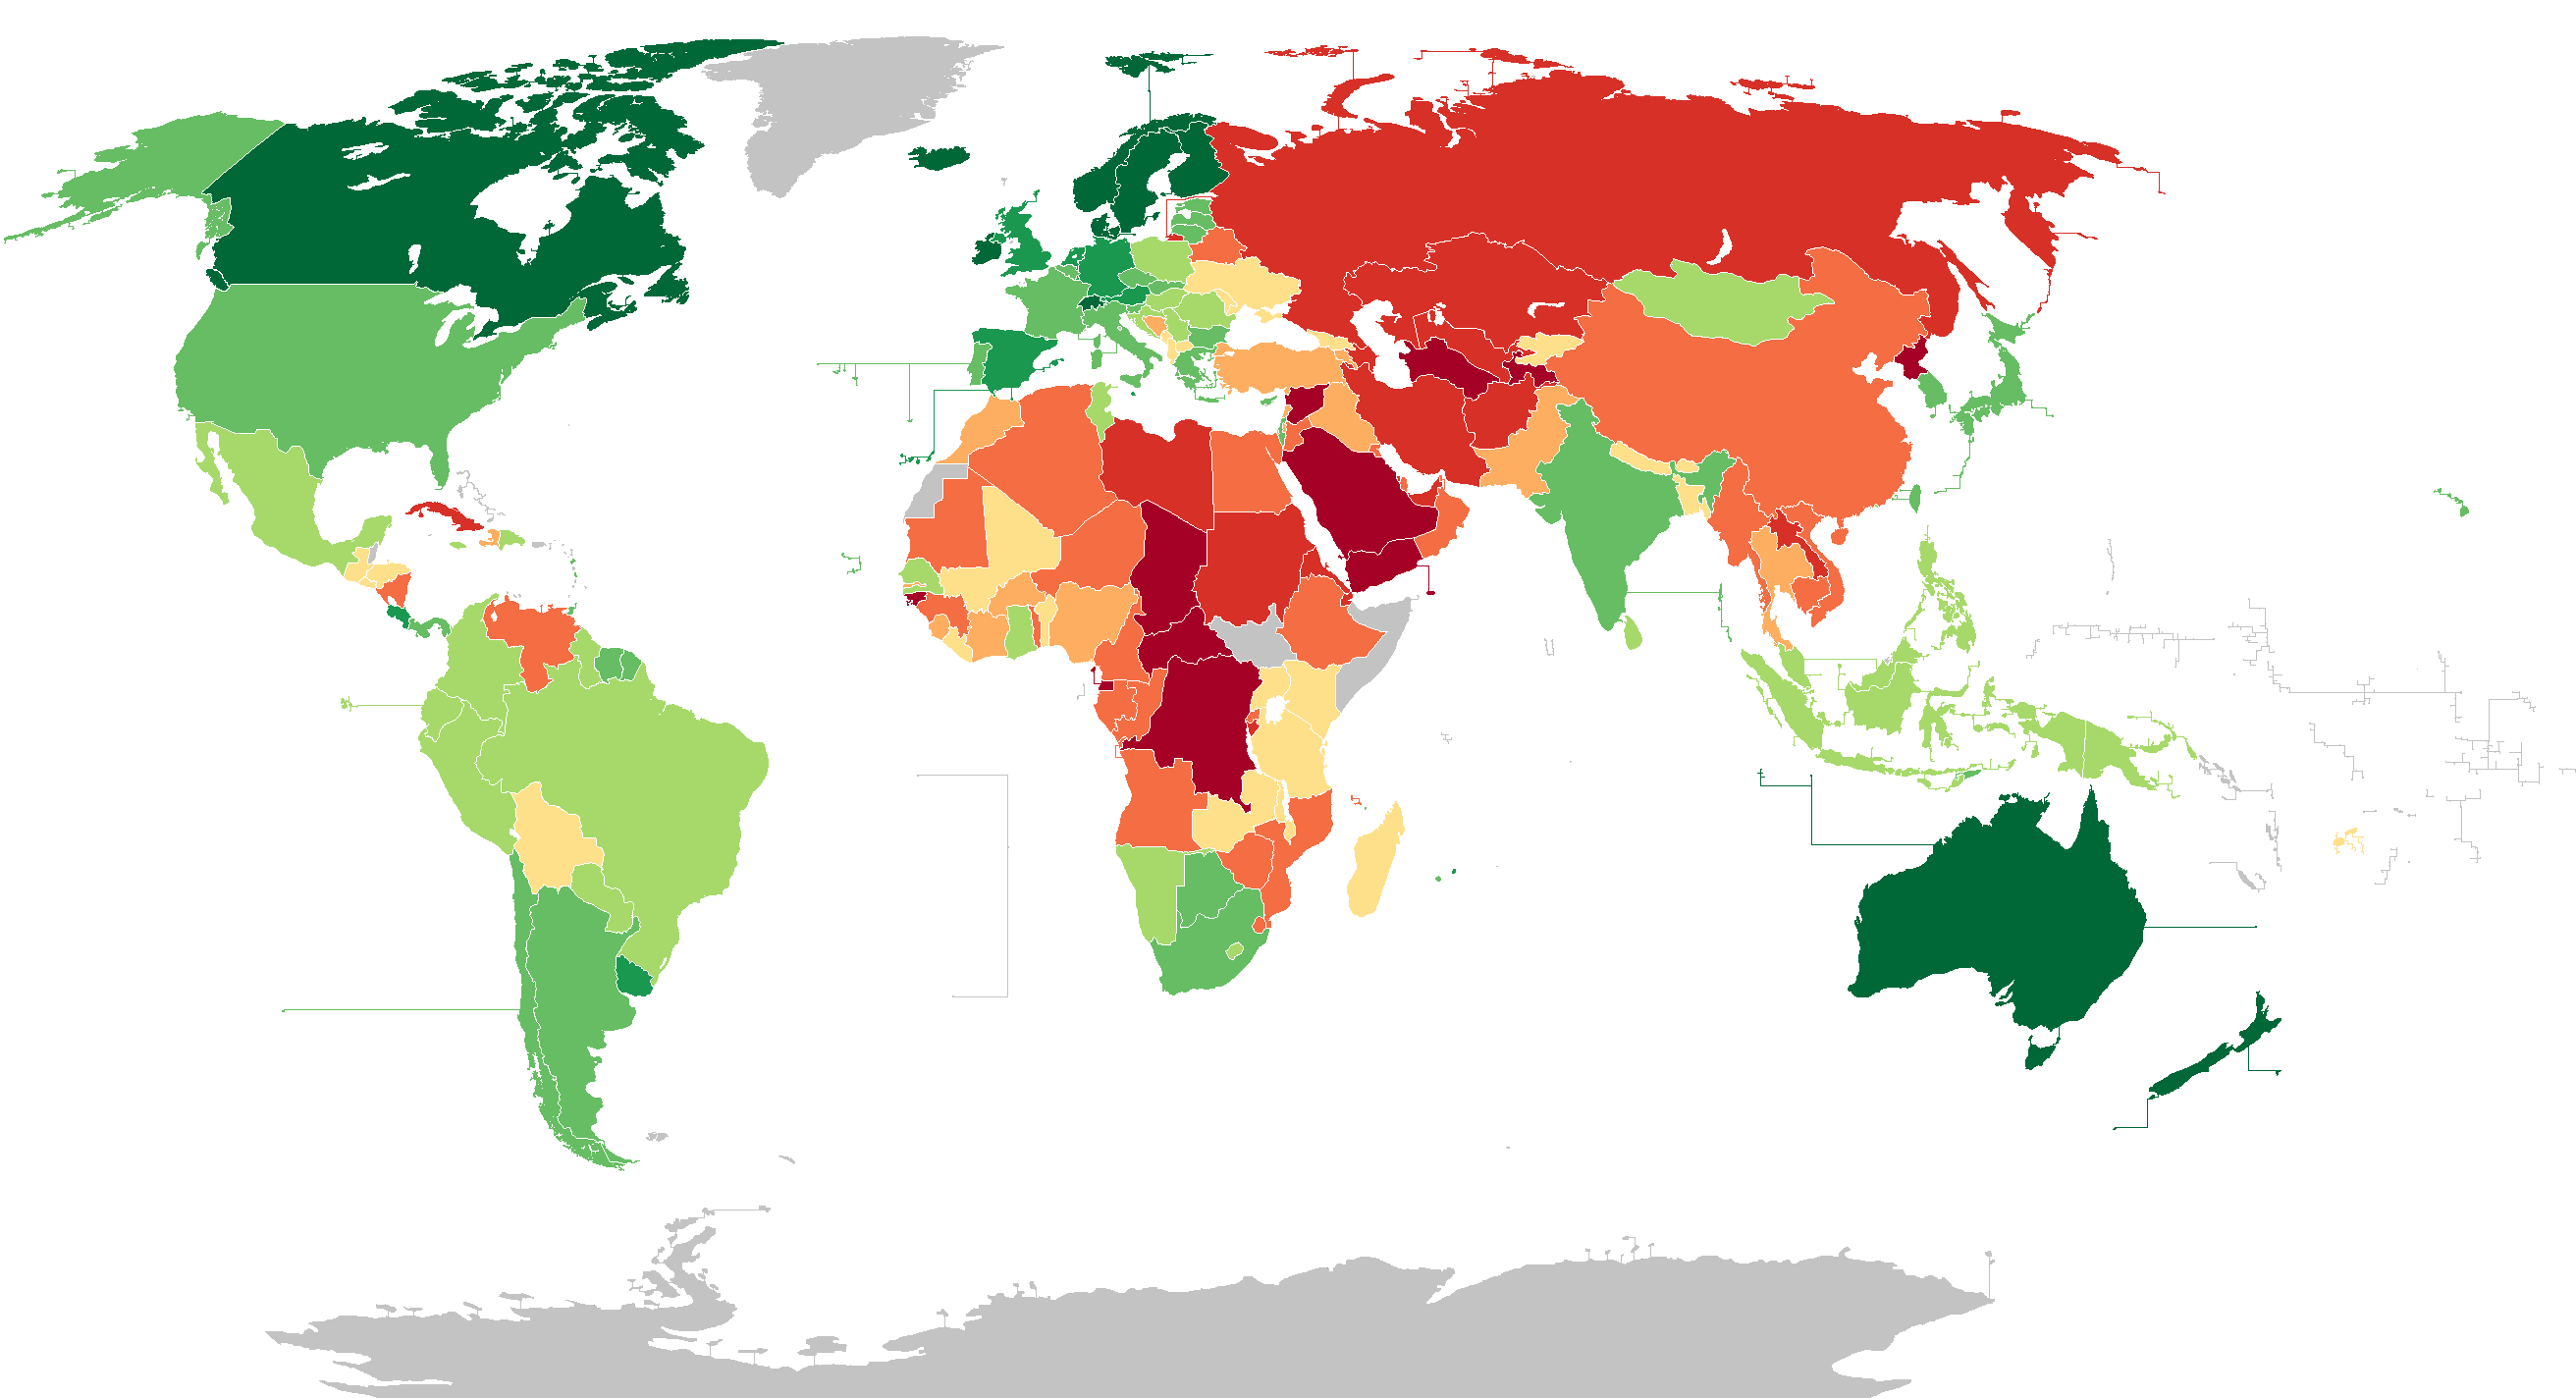 Democracy Index 2018 CC BY-SA 4.0